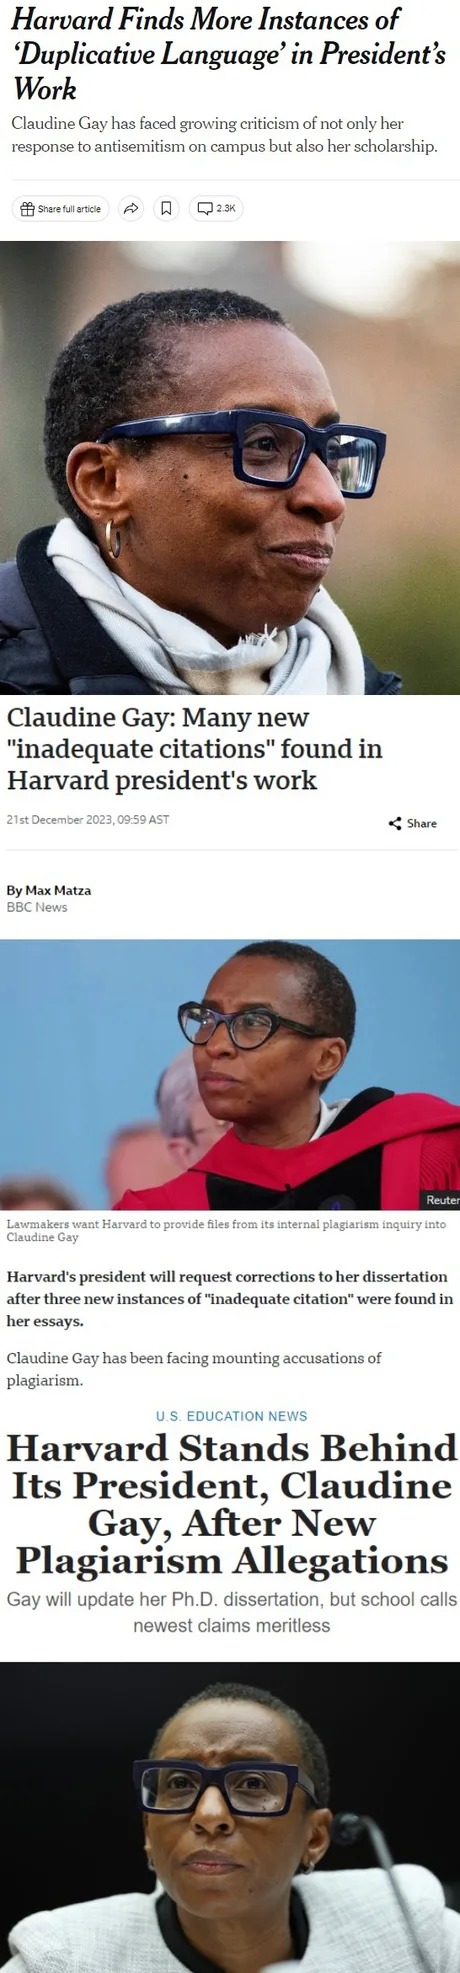 Harvard President plagiarism meme news